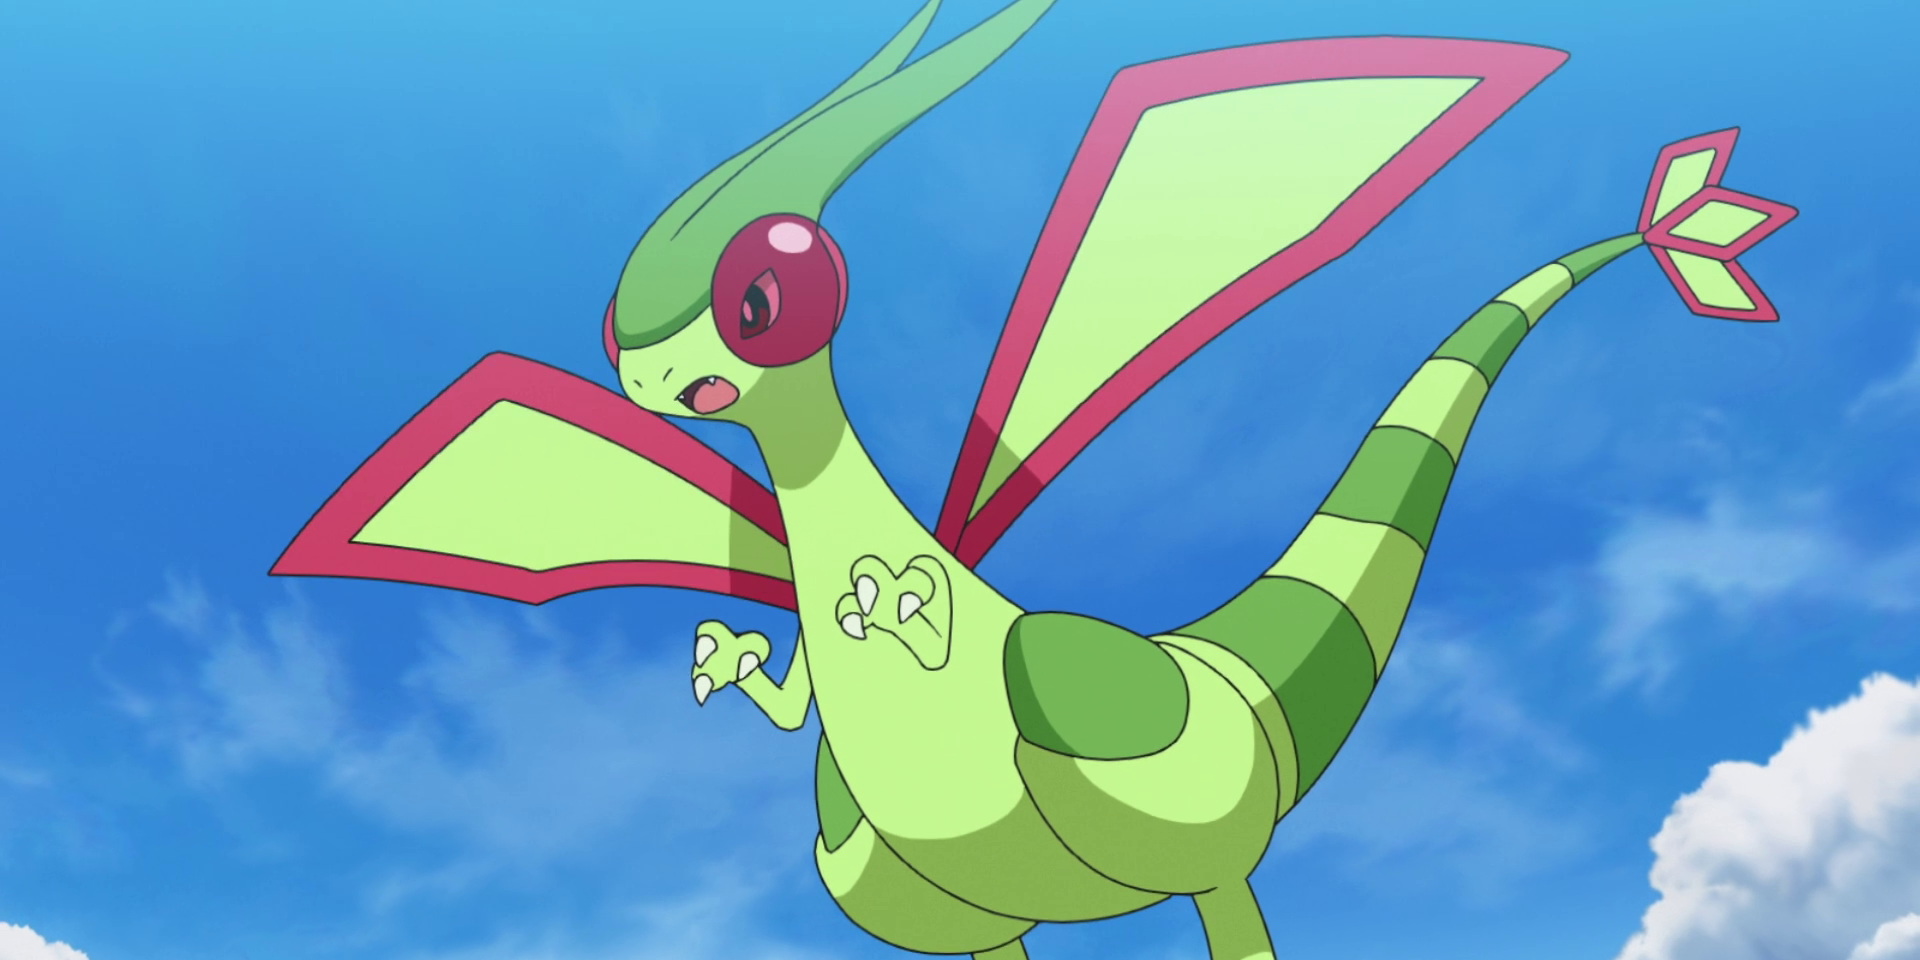 Flygon soars through the air in the Pokémon anime